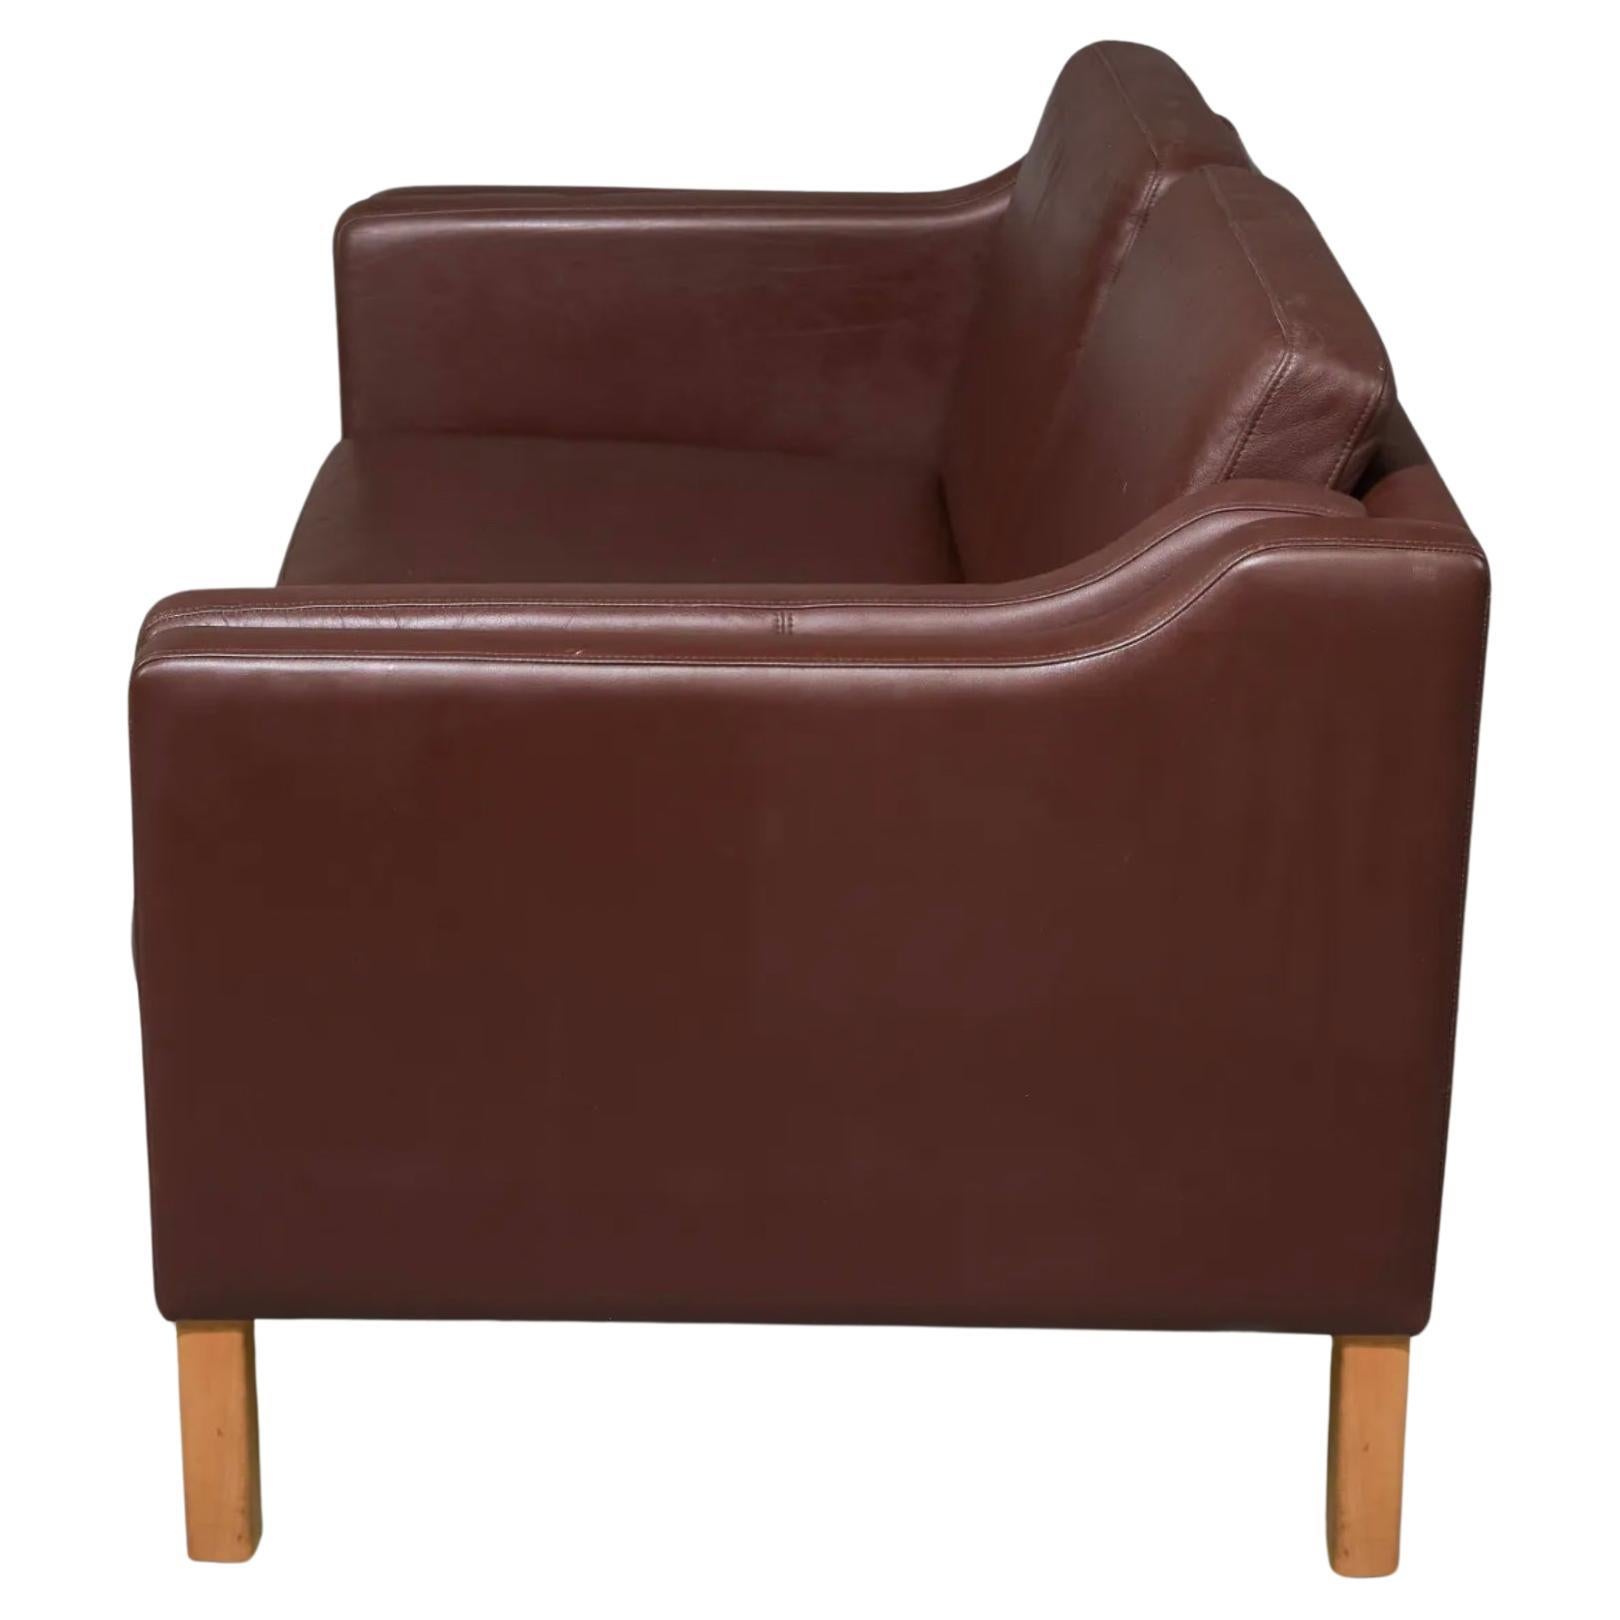 Scandinavian Modern Danish modern brown leather 2 seat sofa with birch legs style of Børge Mogensen For Sale